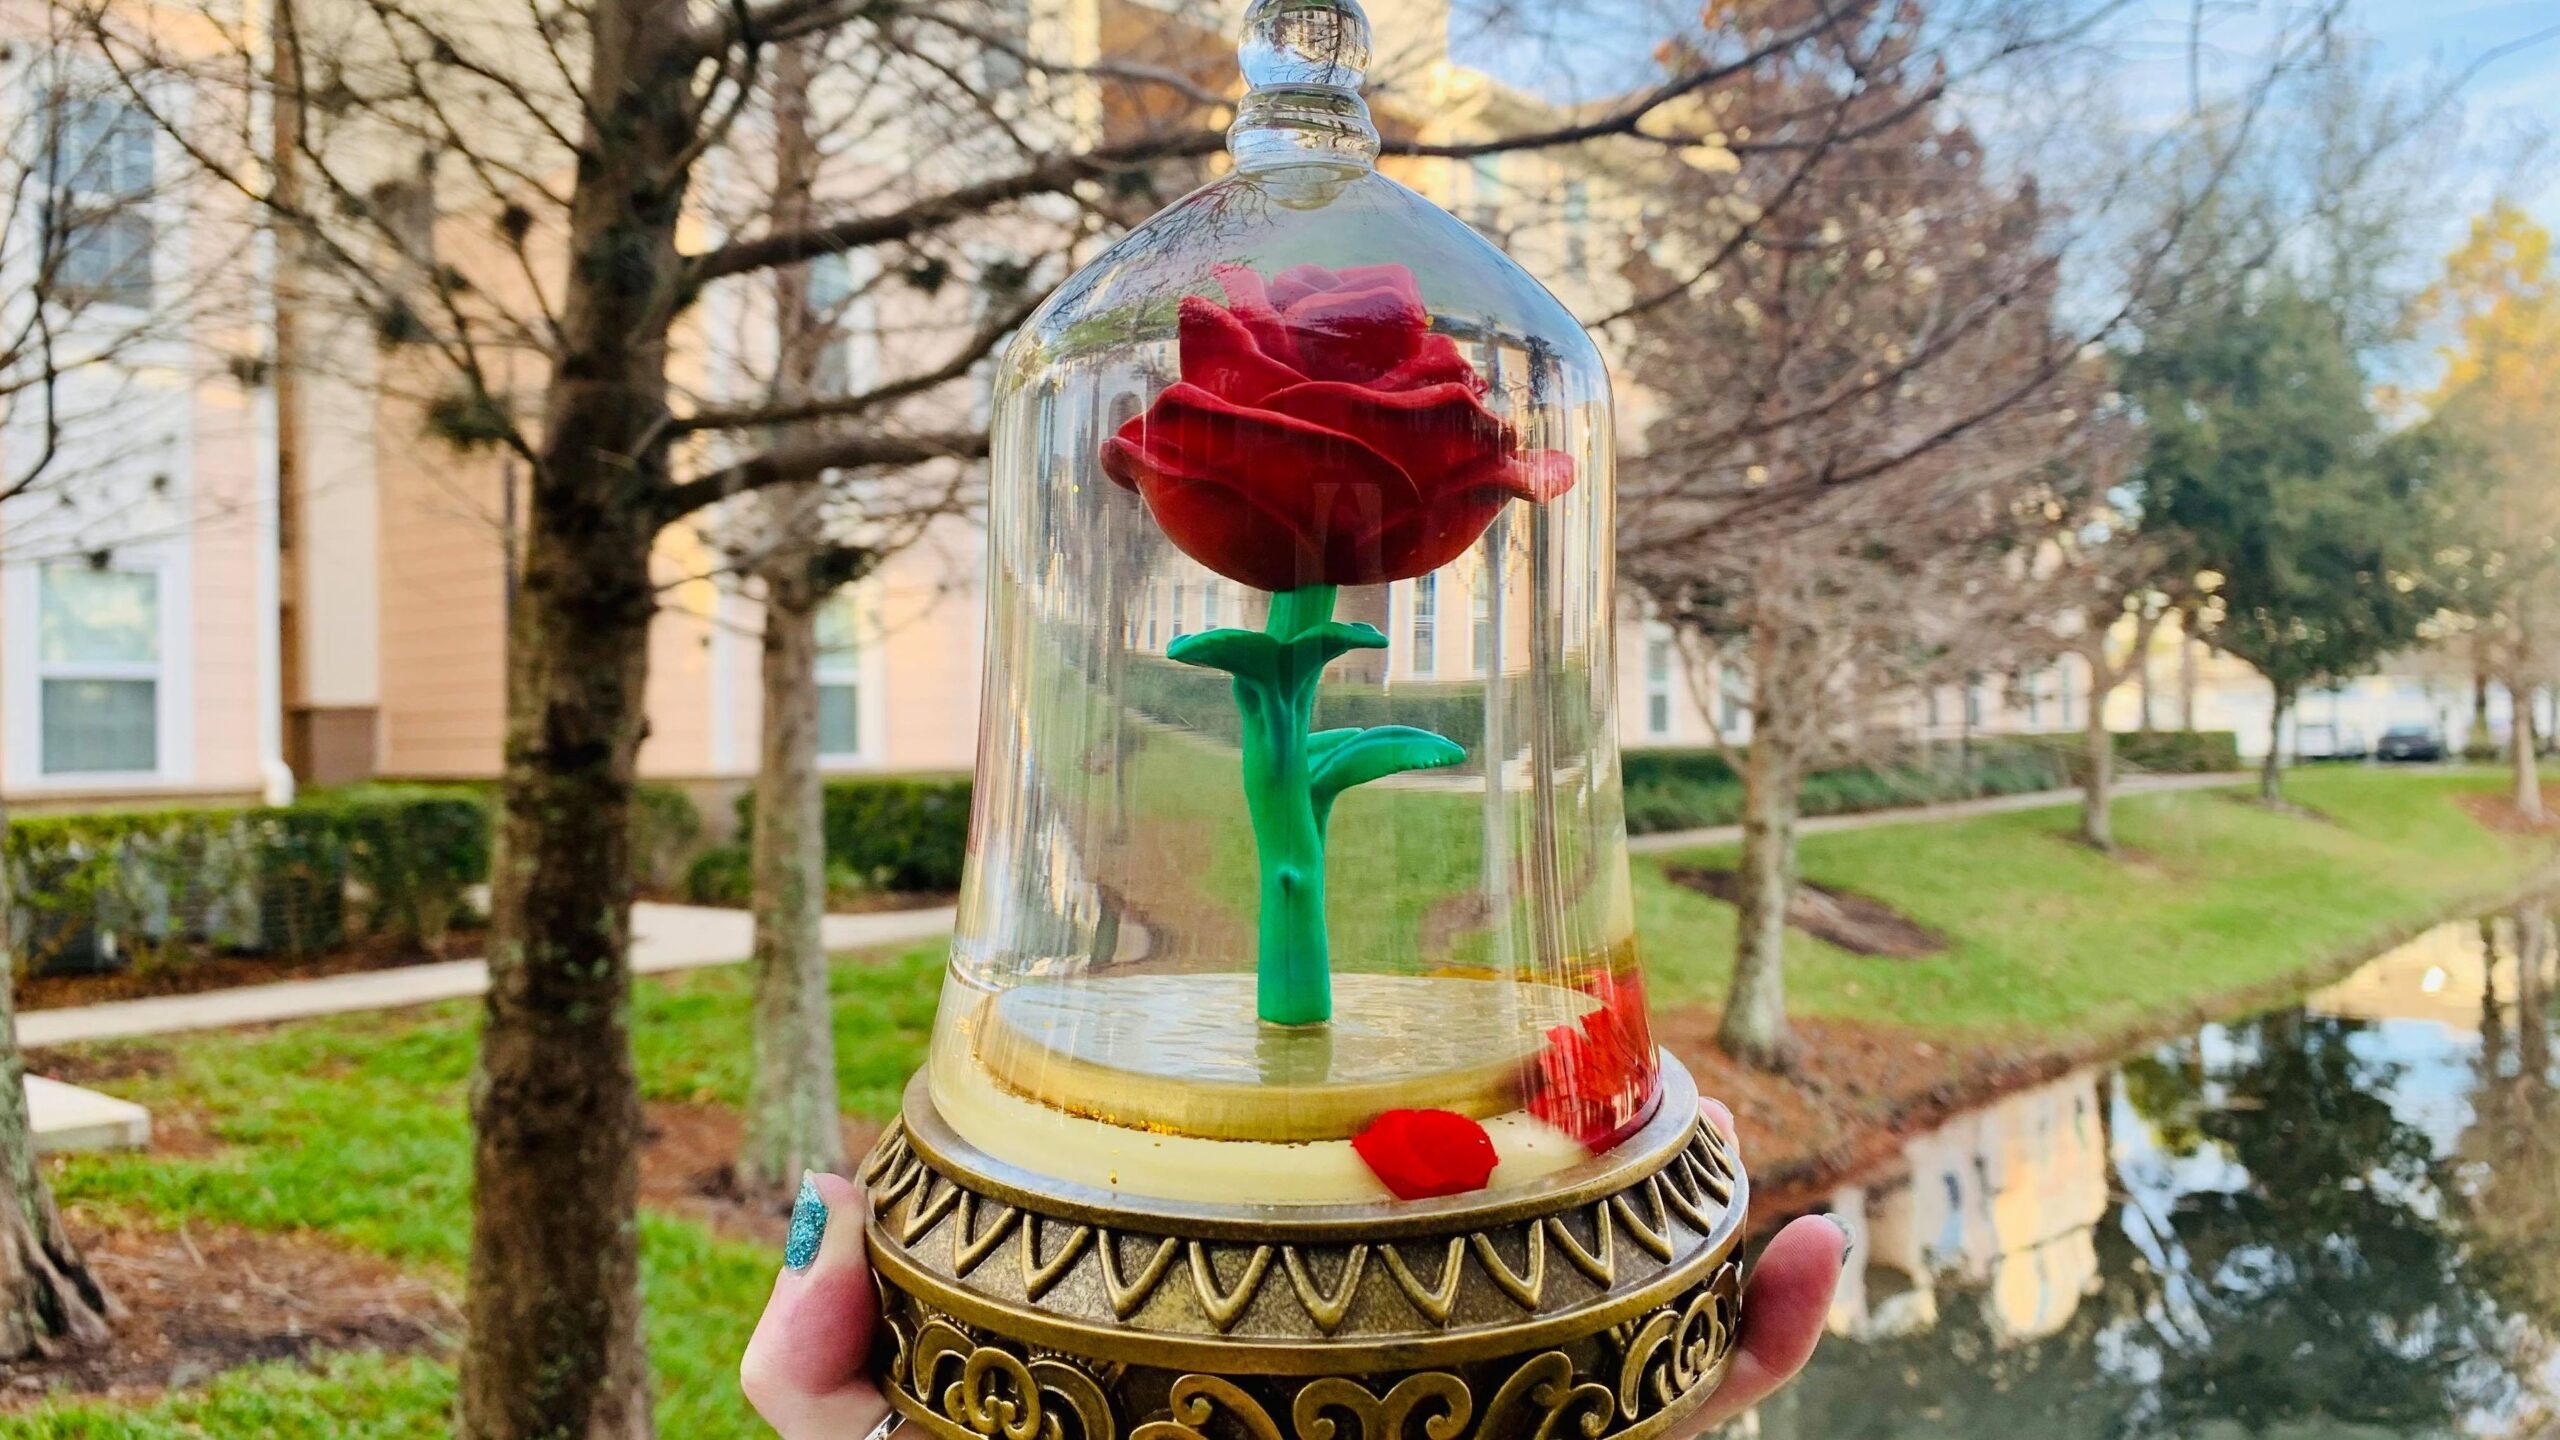 Enchanted Rose Snow Globe